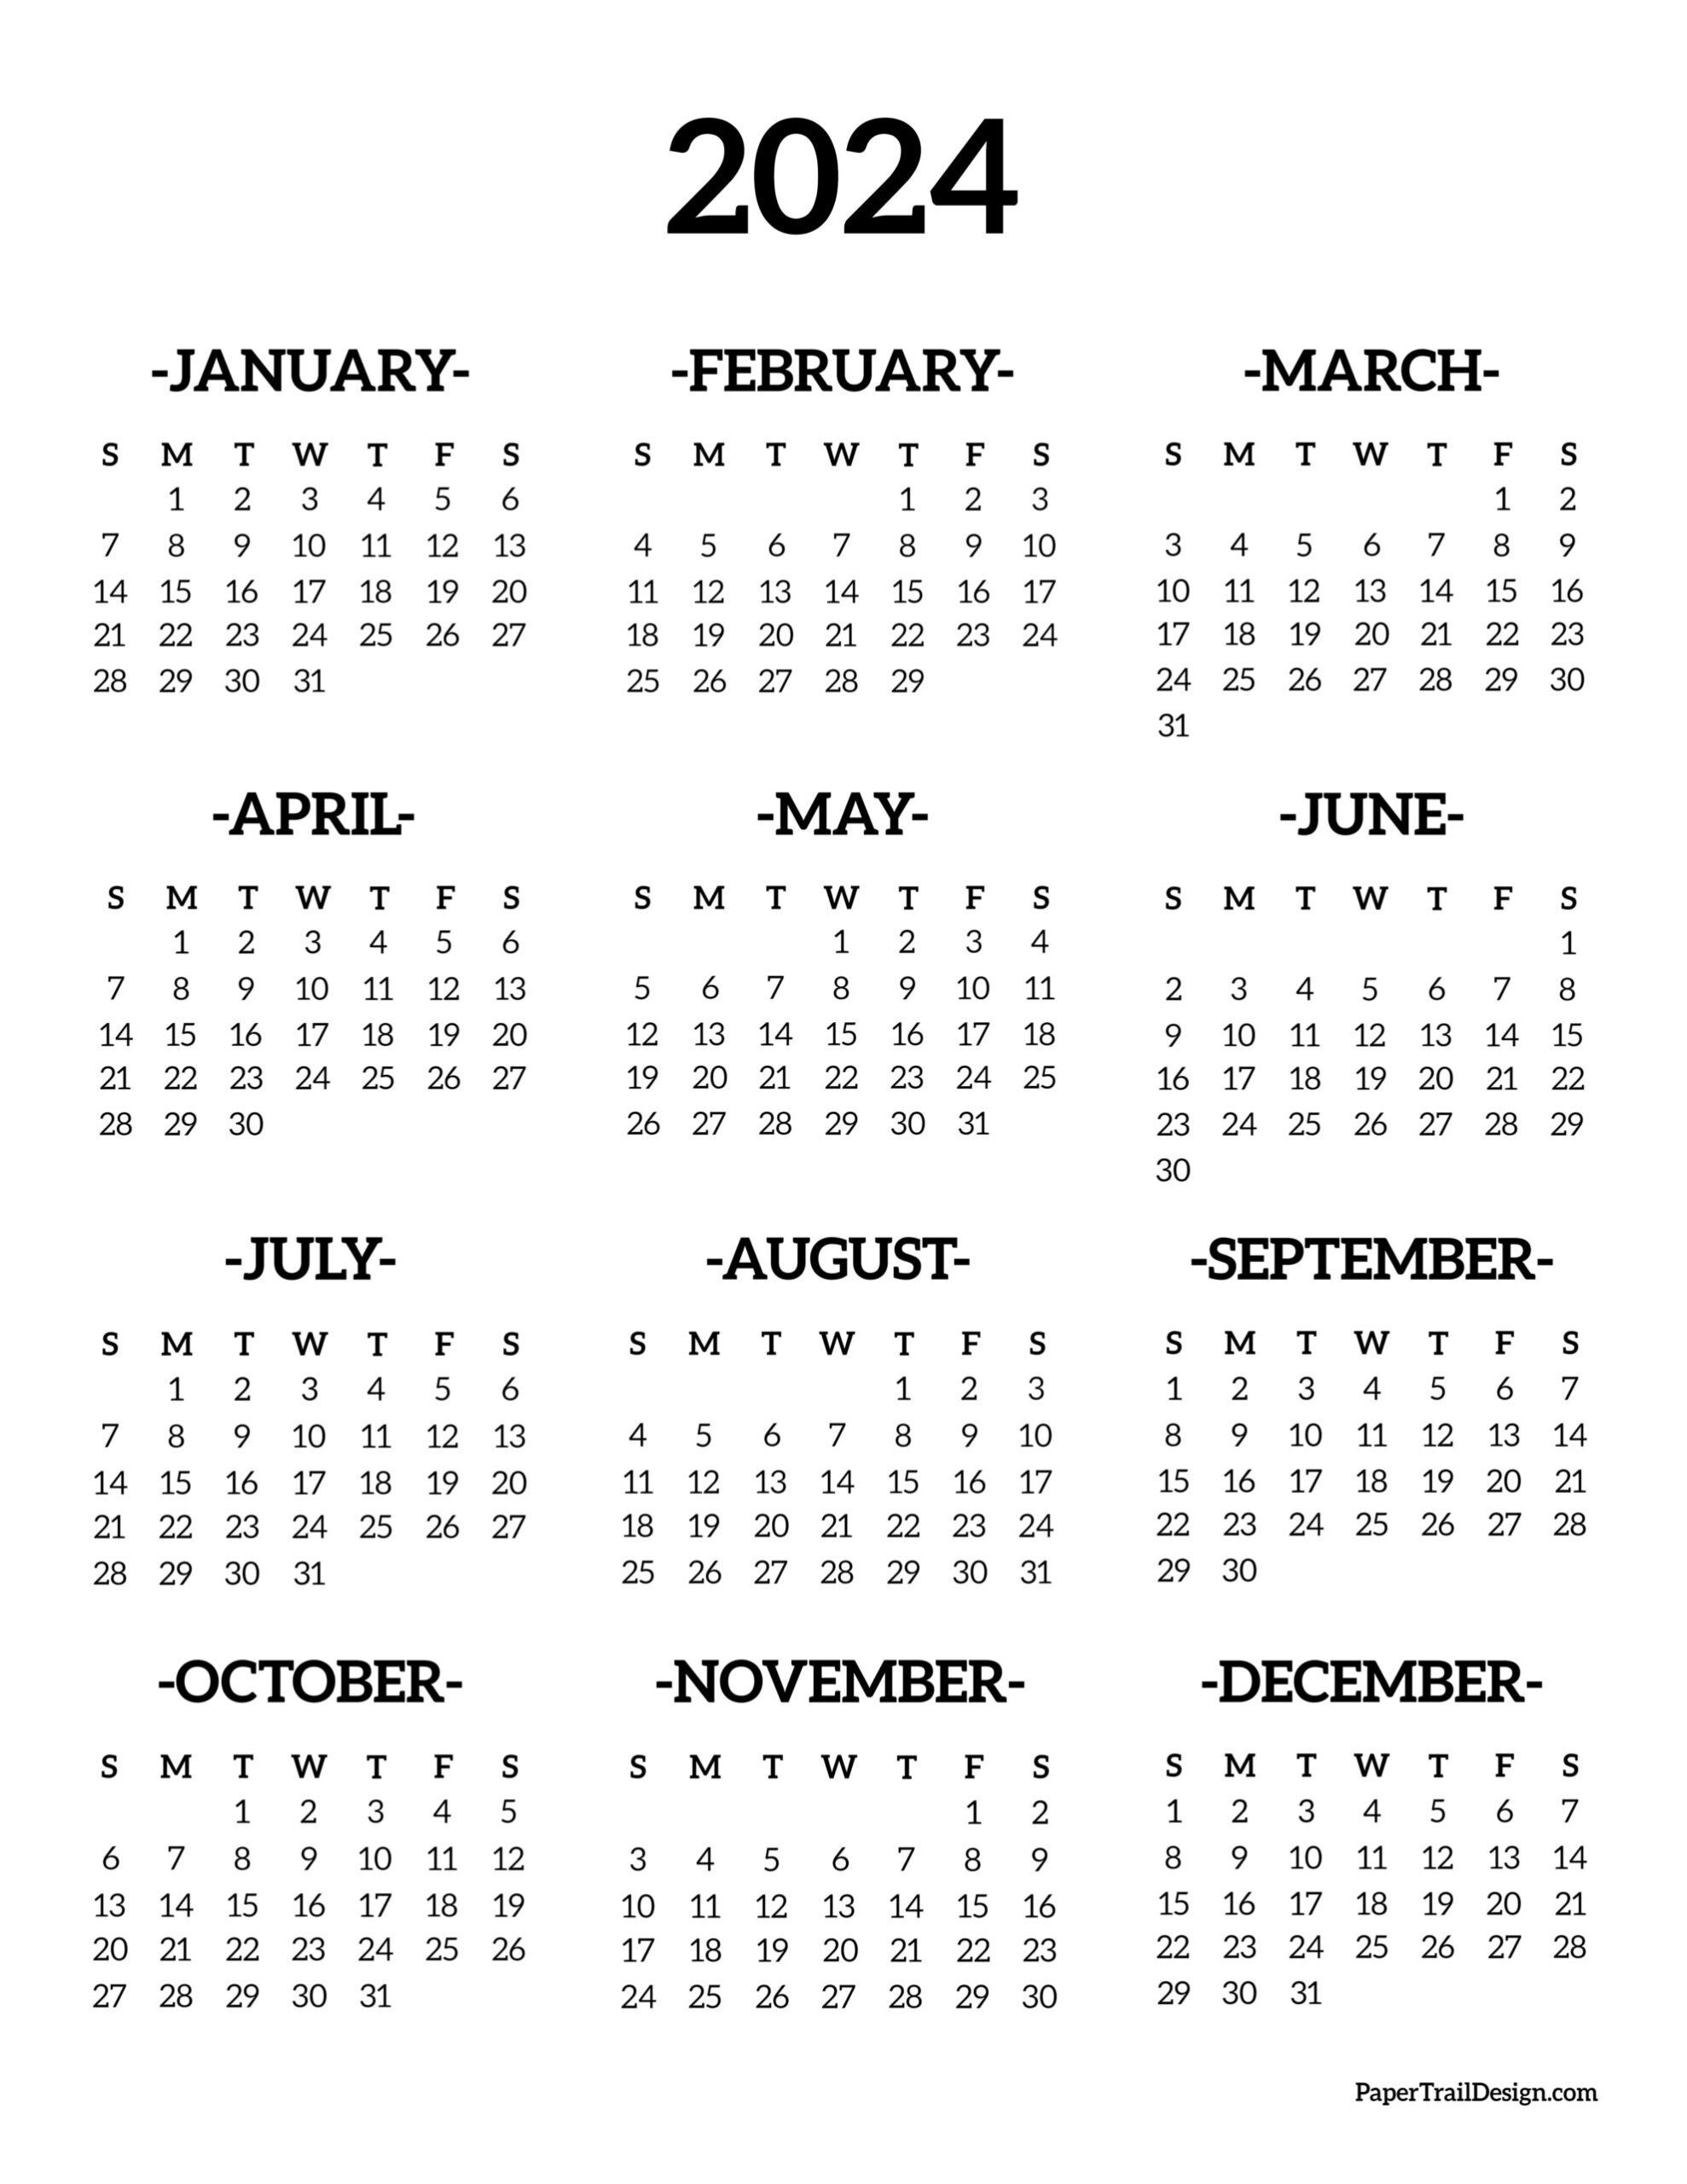 Calendar 2024 Printable One Page - Paper Trail Design | Free Calendar 2024 Printable